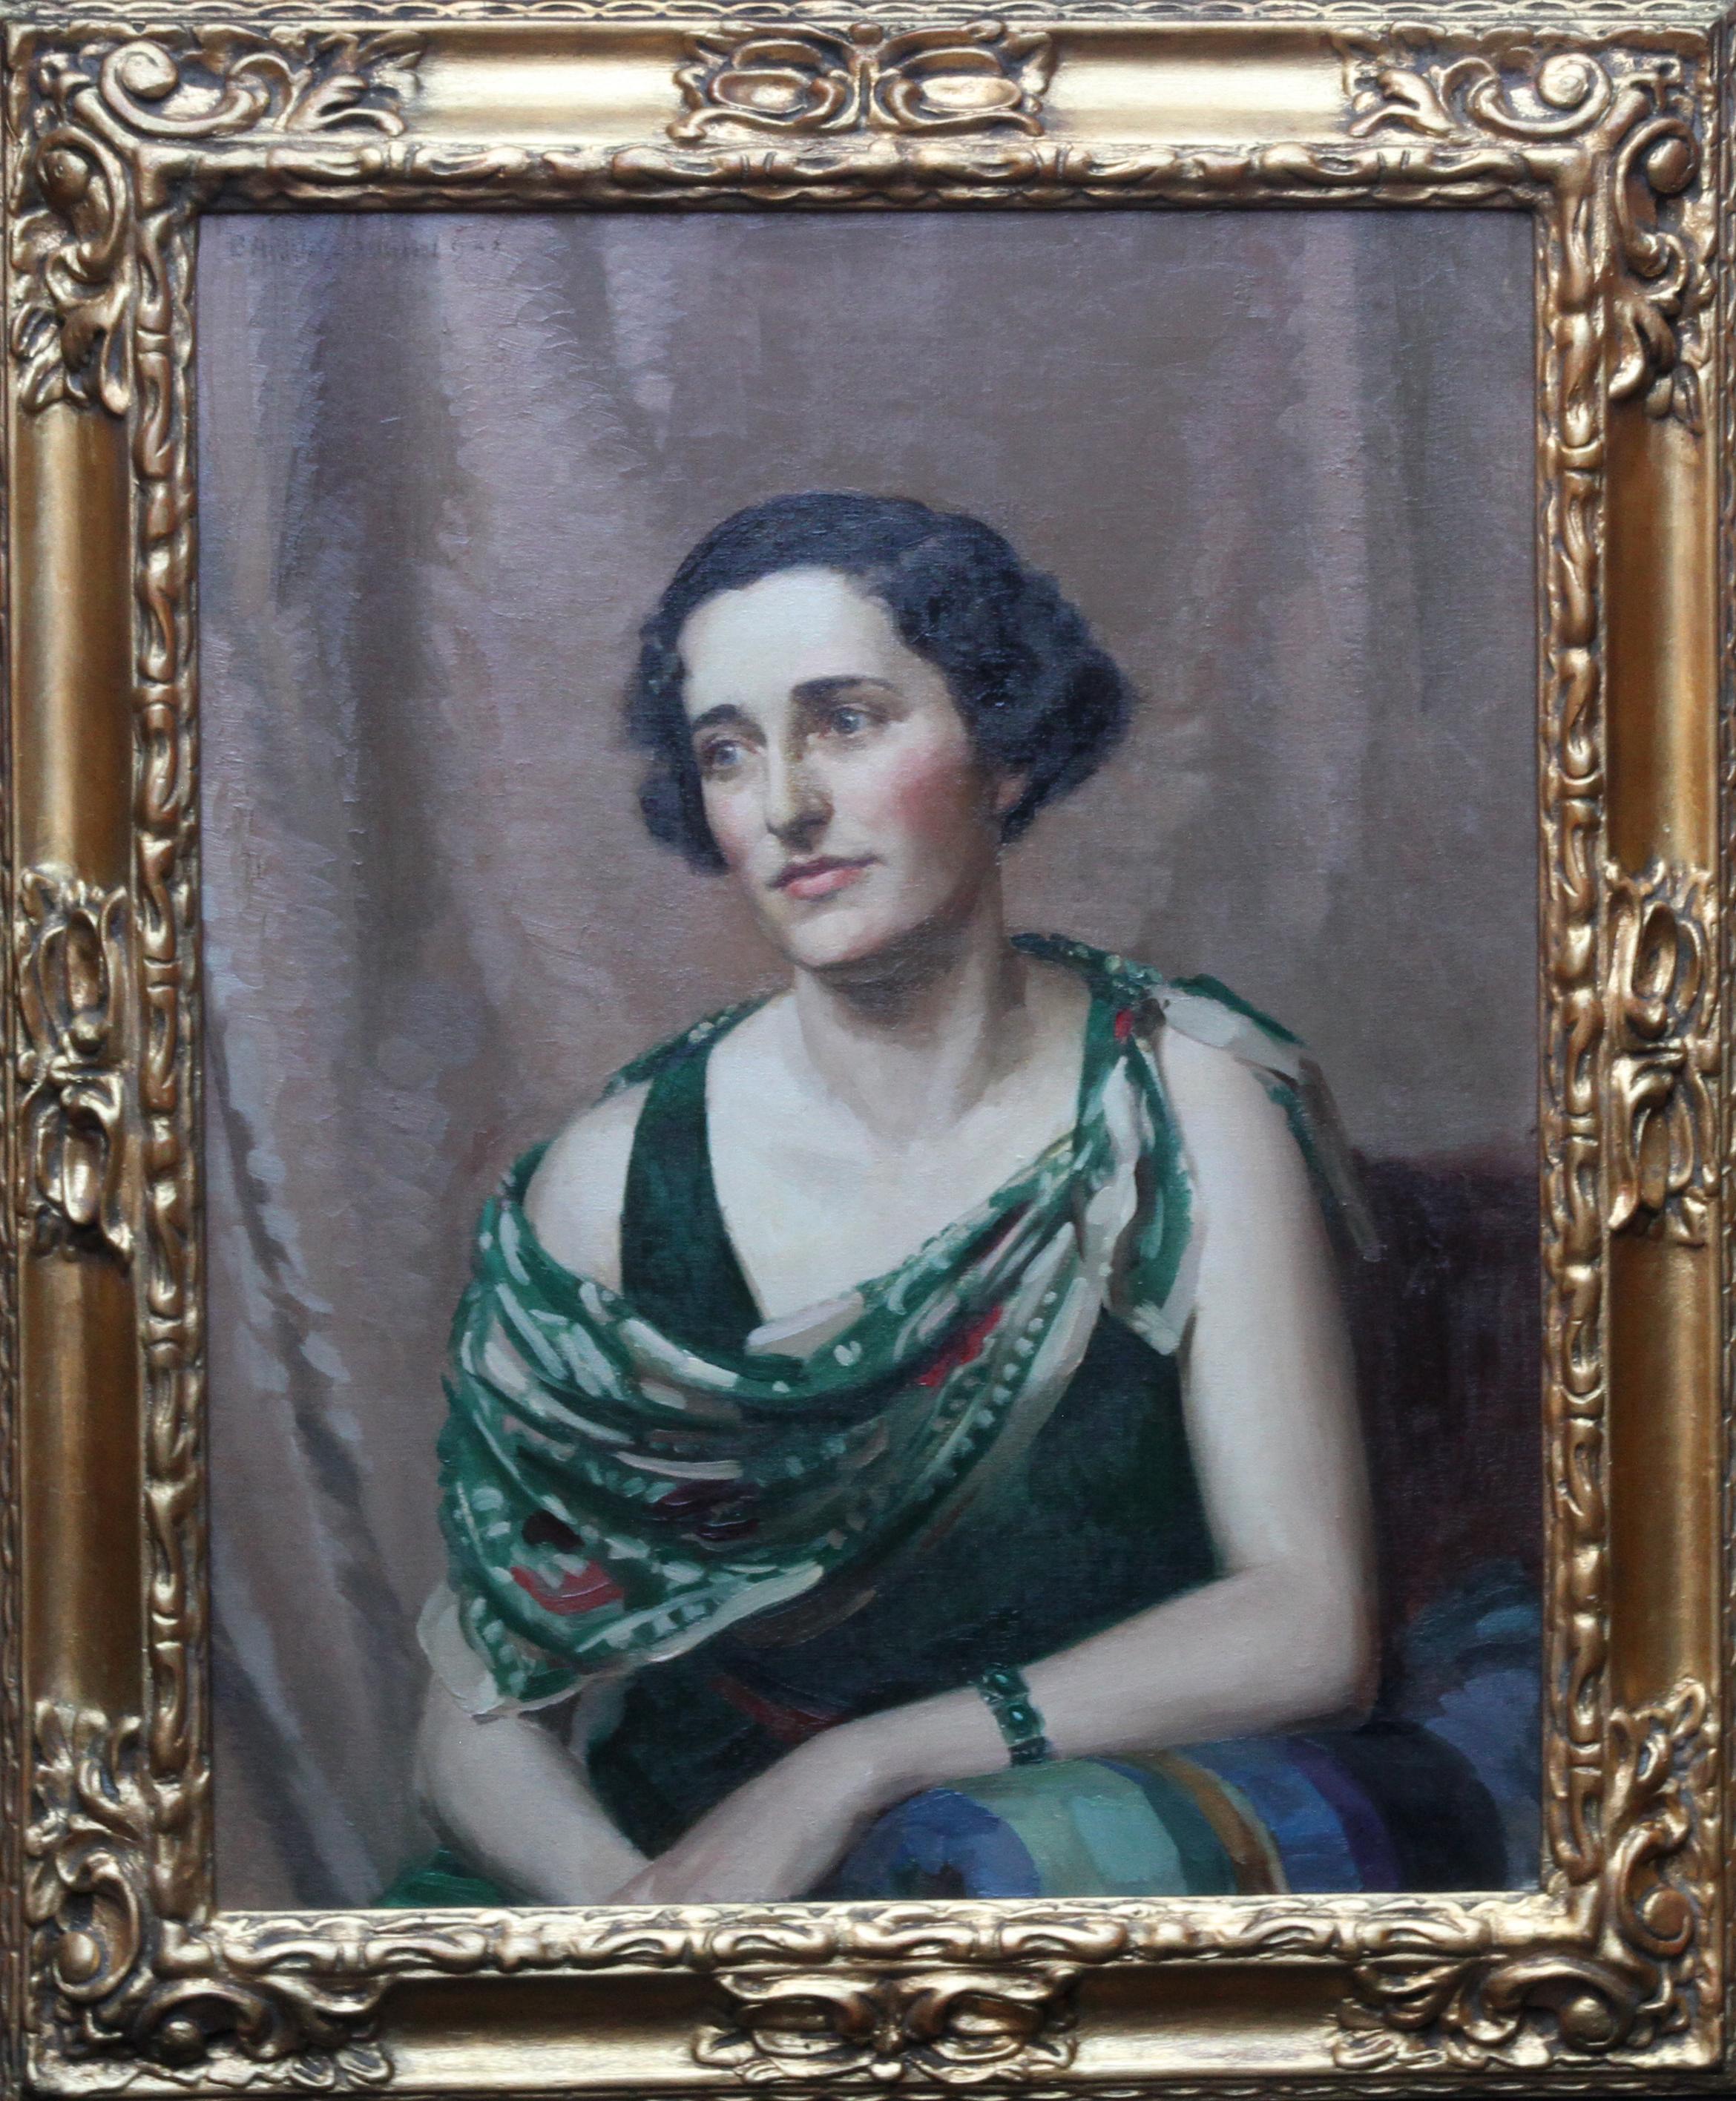 James P. Barraclough Portrait Painting - Pamela Abercromby - British Art Deco 30's portrait oil painting lady in green